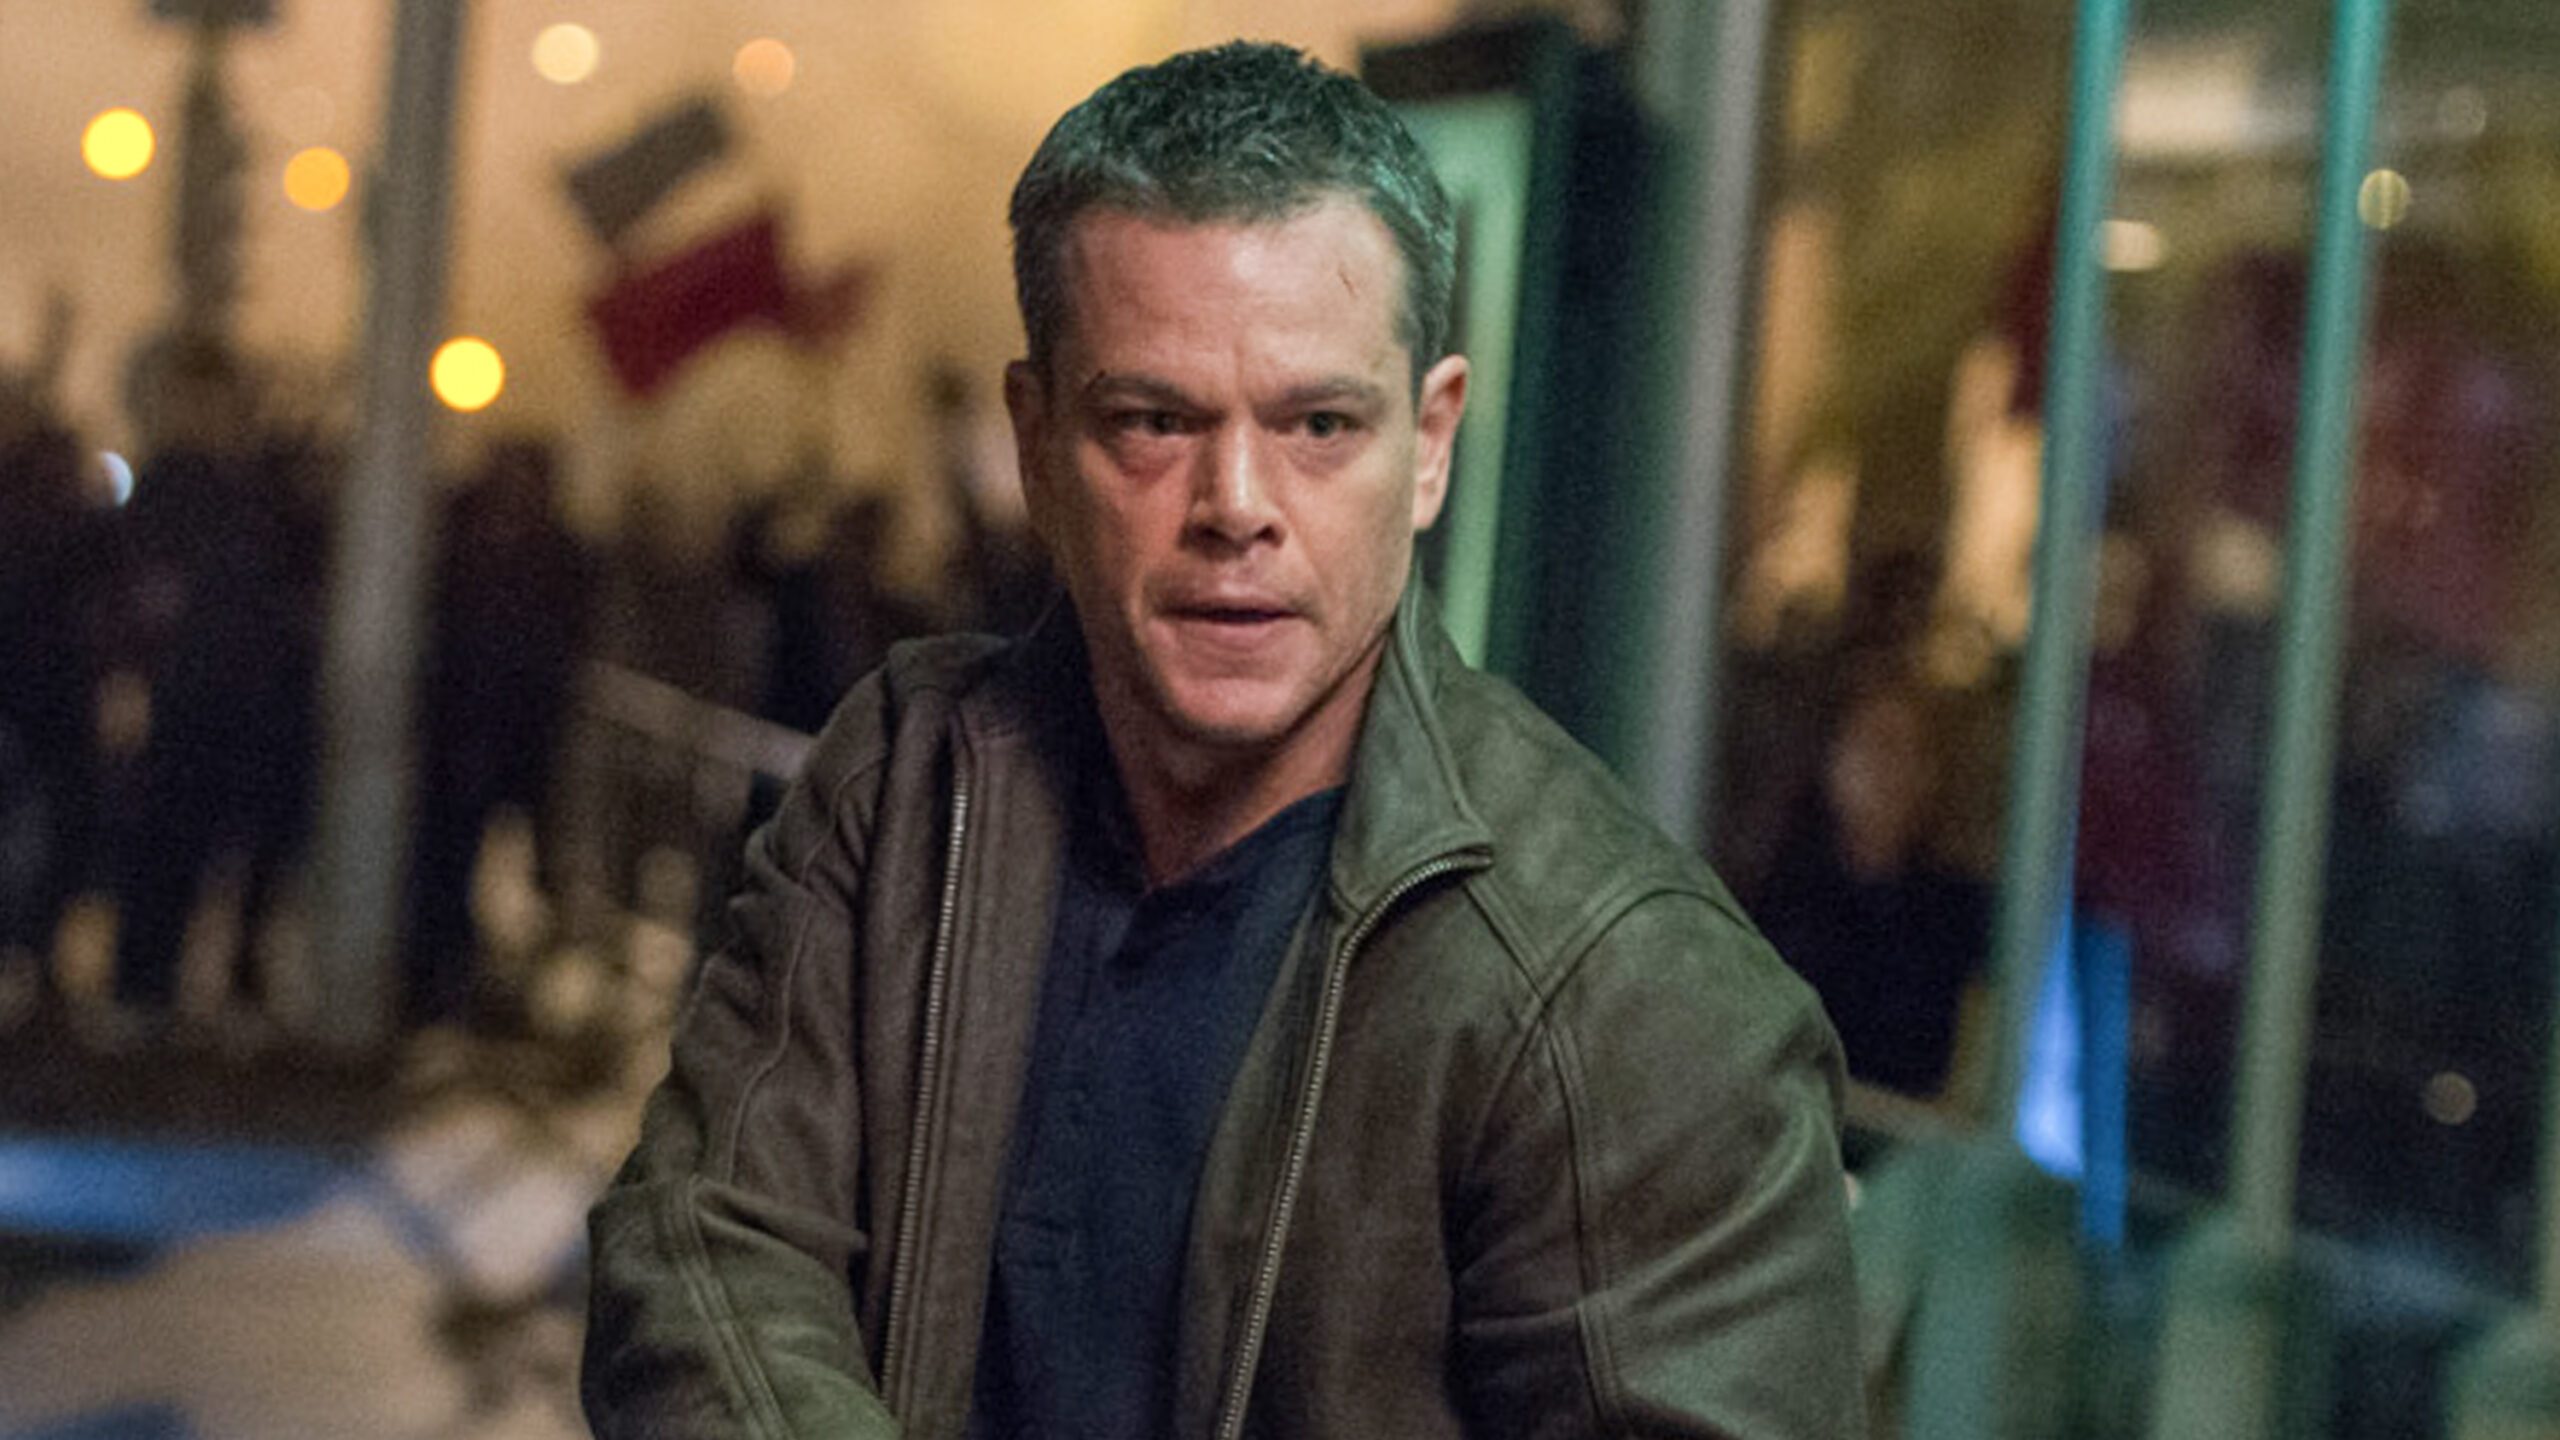 [WATCH] Matt Damon returns as ‘Jason Bourne’: 11 fun facts about the movie